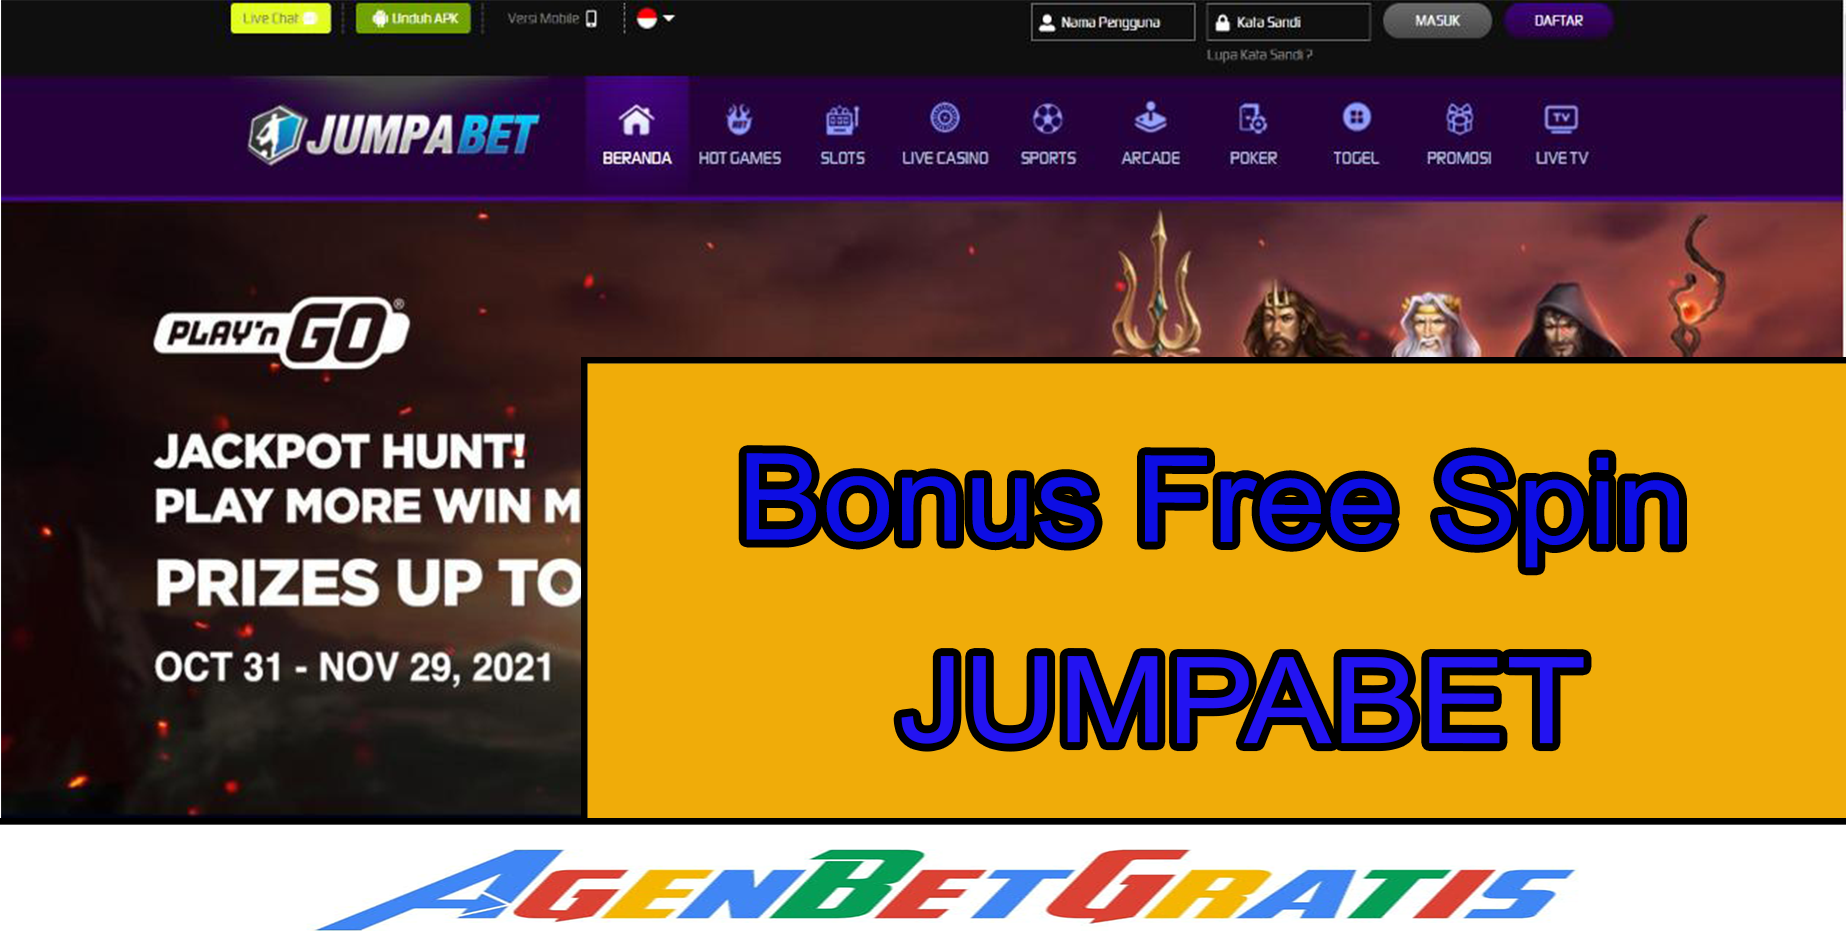 JUMPABET - Bonus Freespin